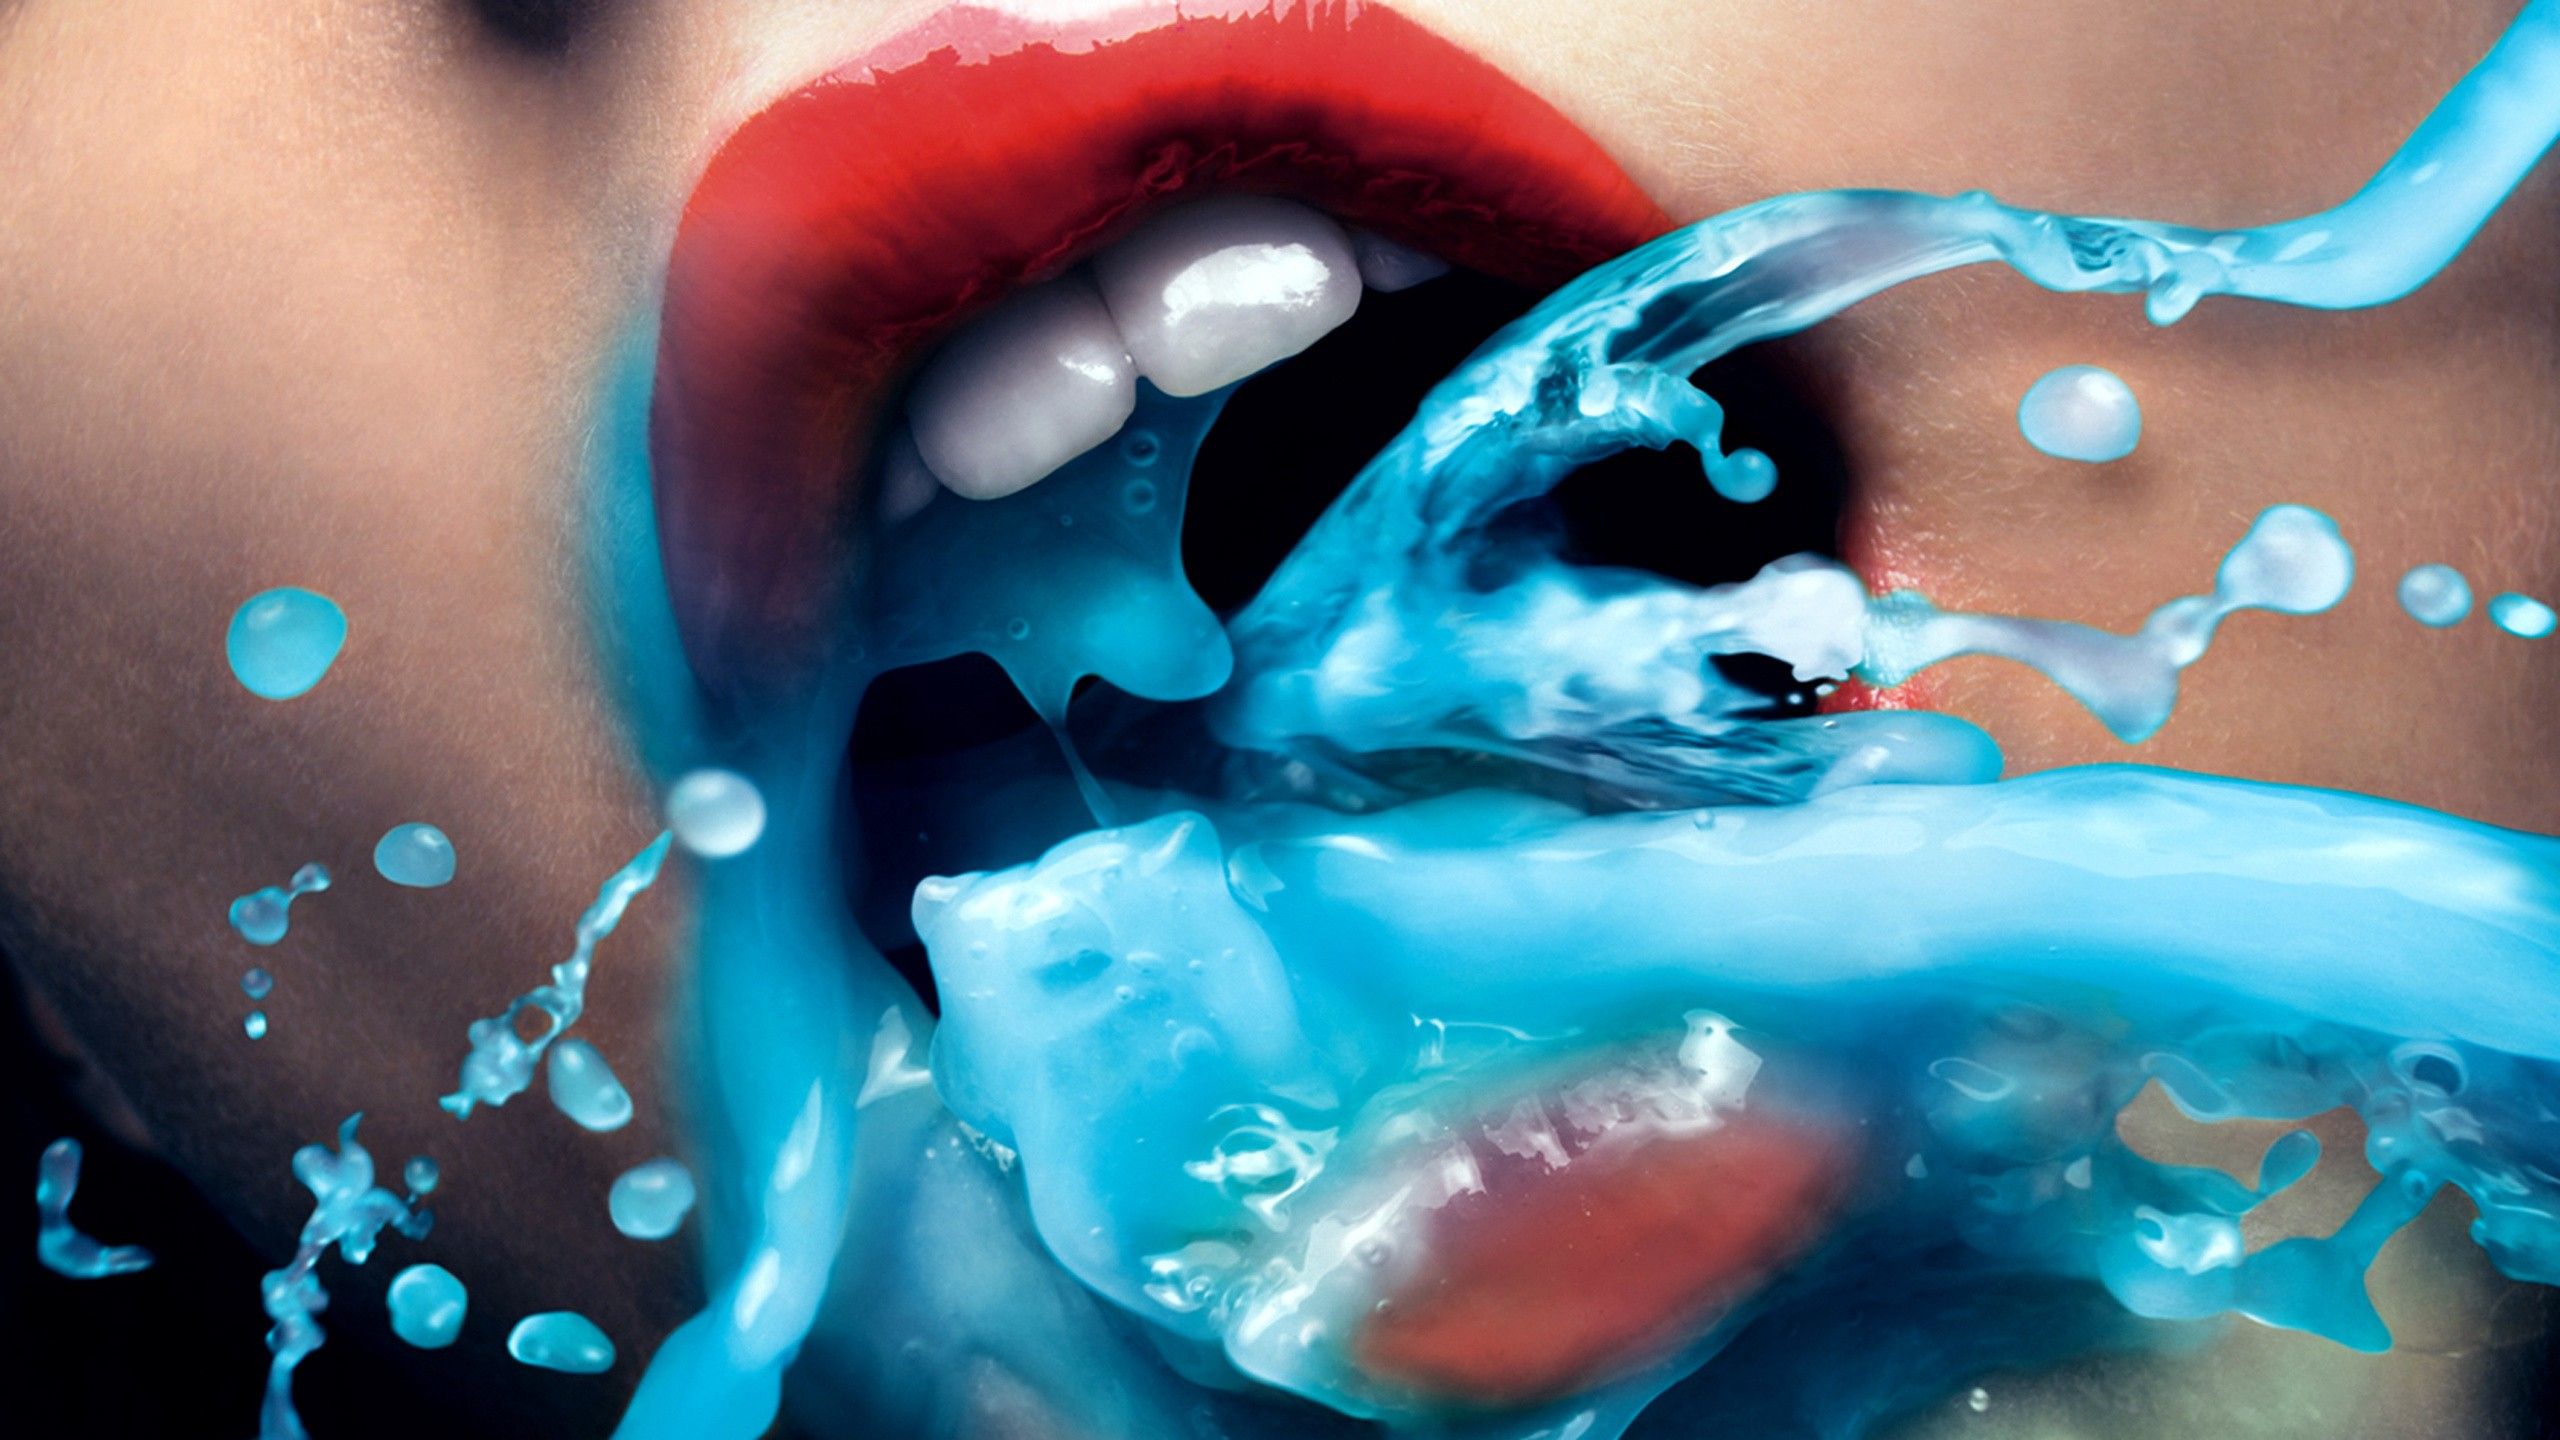 Wallpaper, digital art, women, red, artwork, blue, underwater, mouth, liquid, color, human body, organ 2560x1440